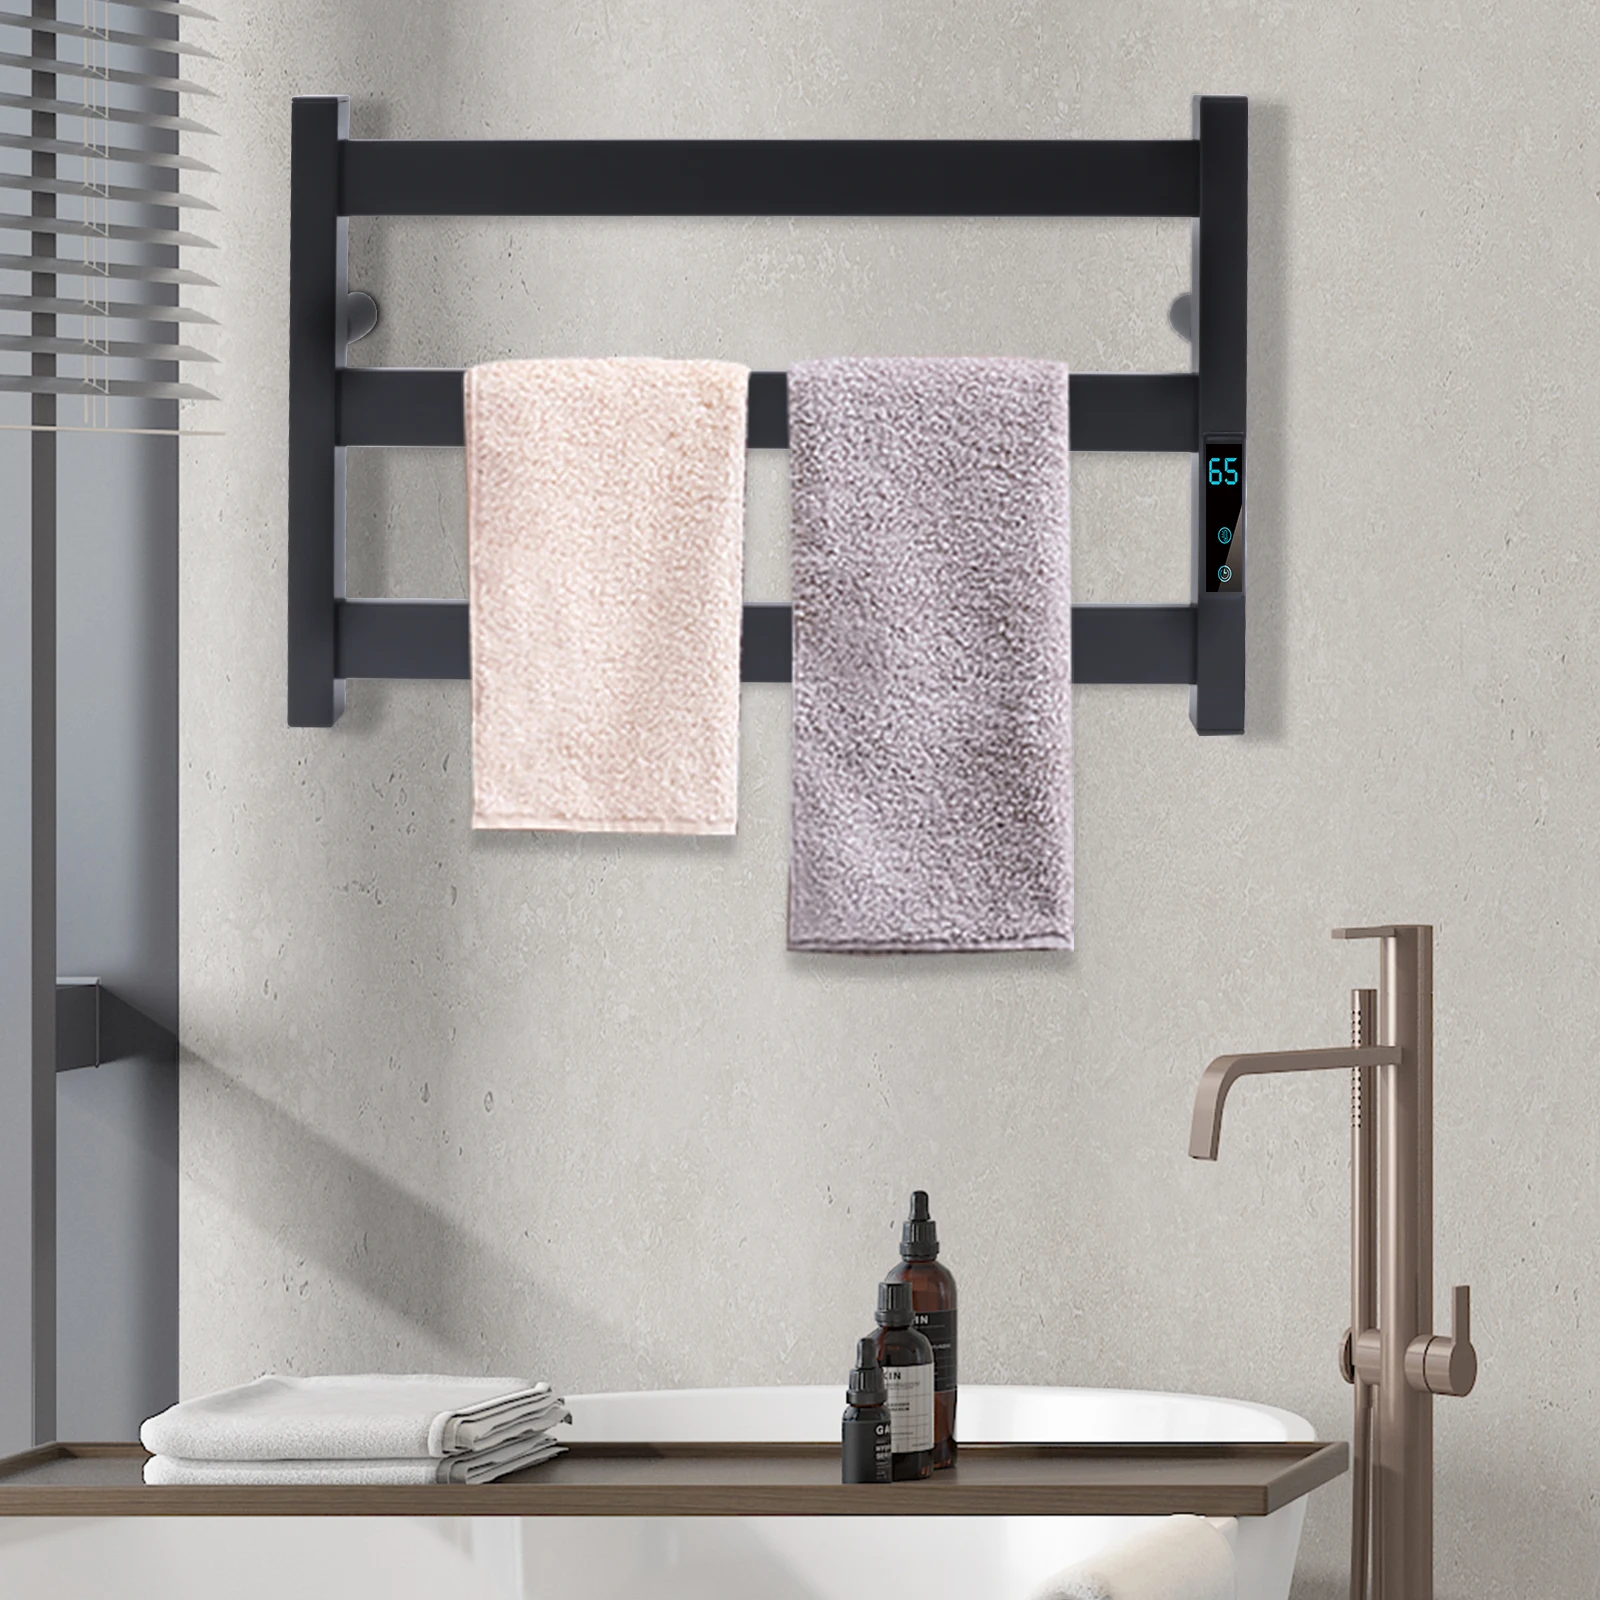 

3 Bars Electric Heated Wall Mounted Towel Drying Rack Electric Heated Towel Rack Stainless Steel Towel Warmer